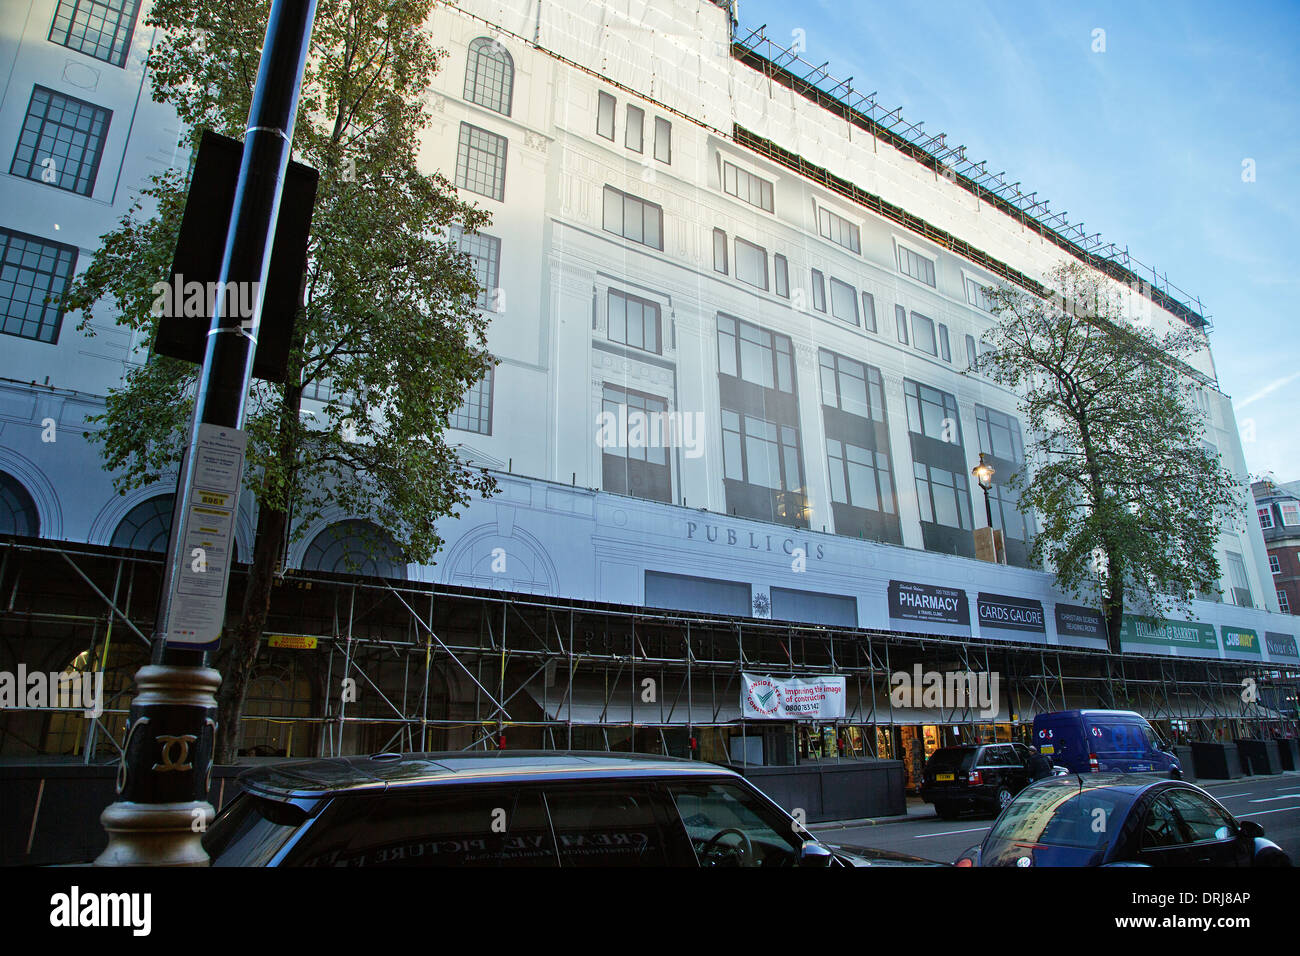 Screen protecting restoration of Publicis building, Baker Street, London, England, UK Stock Photo